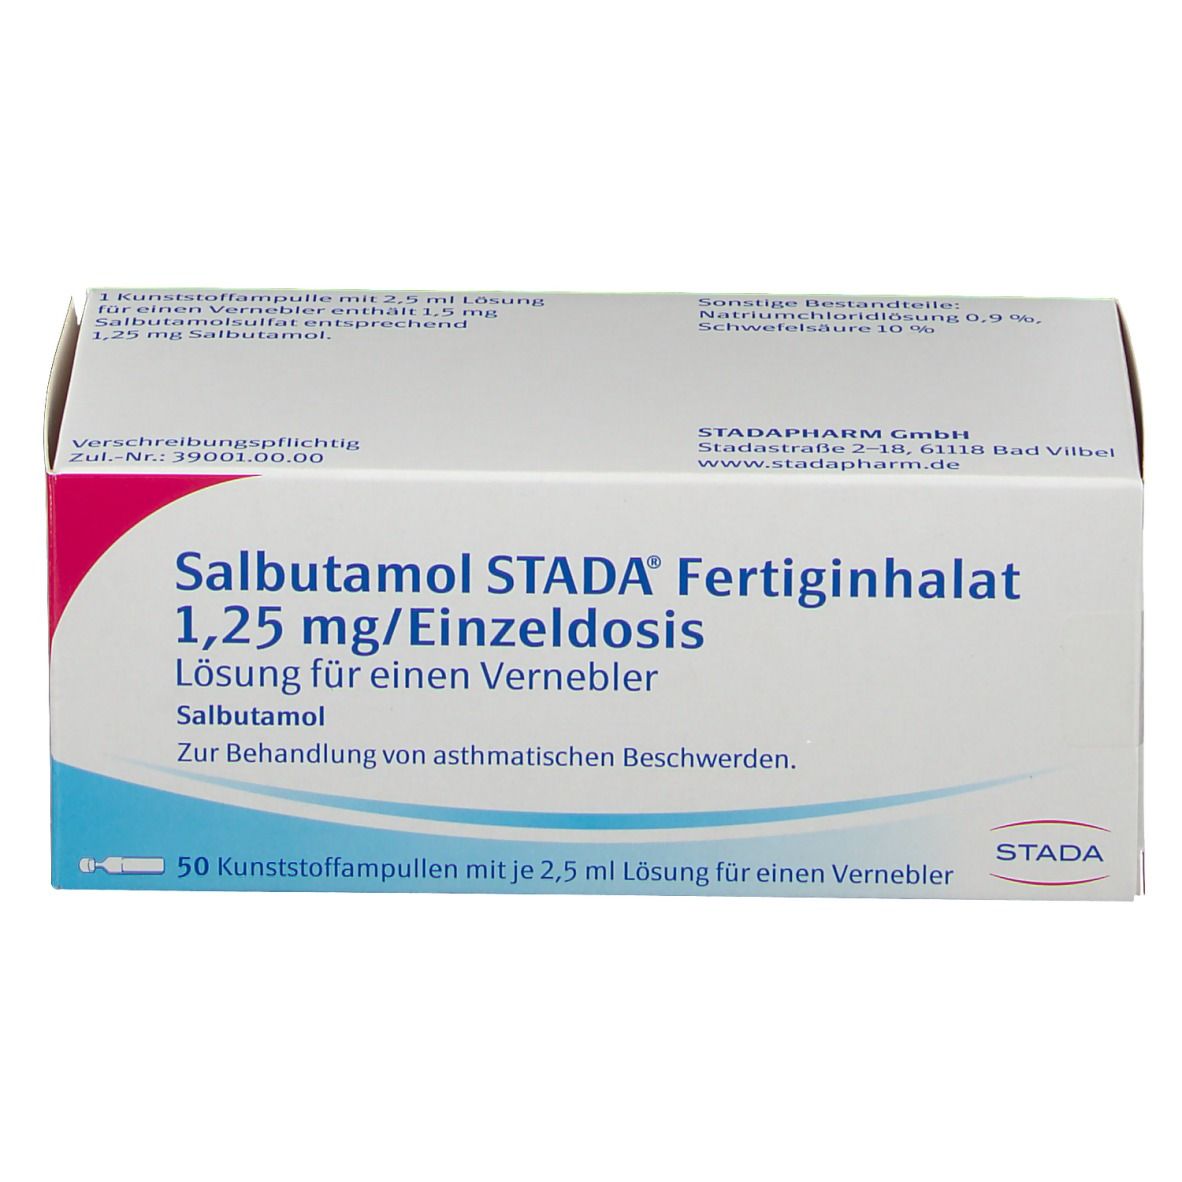 Salbutamol STADA® Fertiginhalat 1,25 mg/Einzeldosis